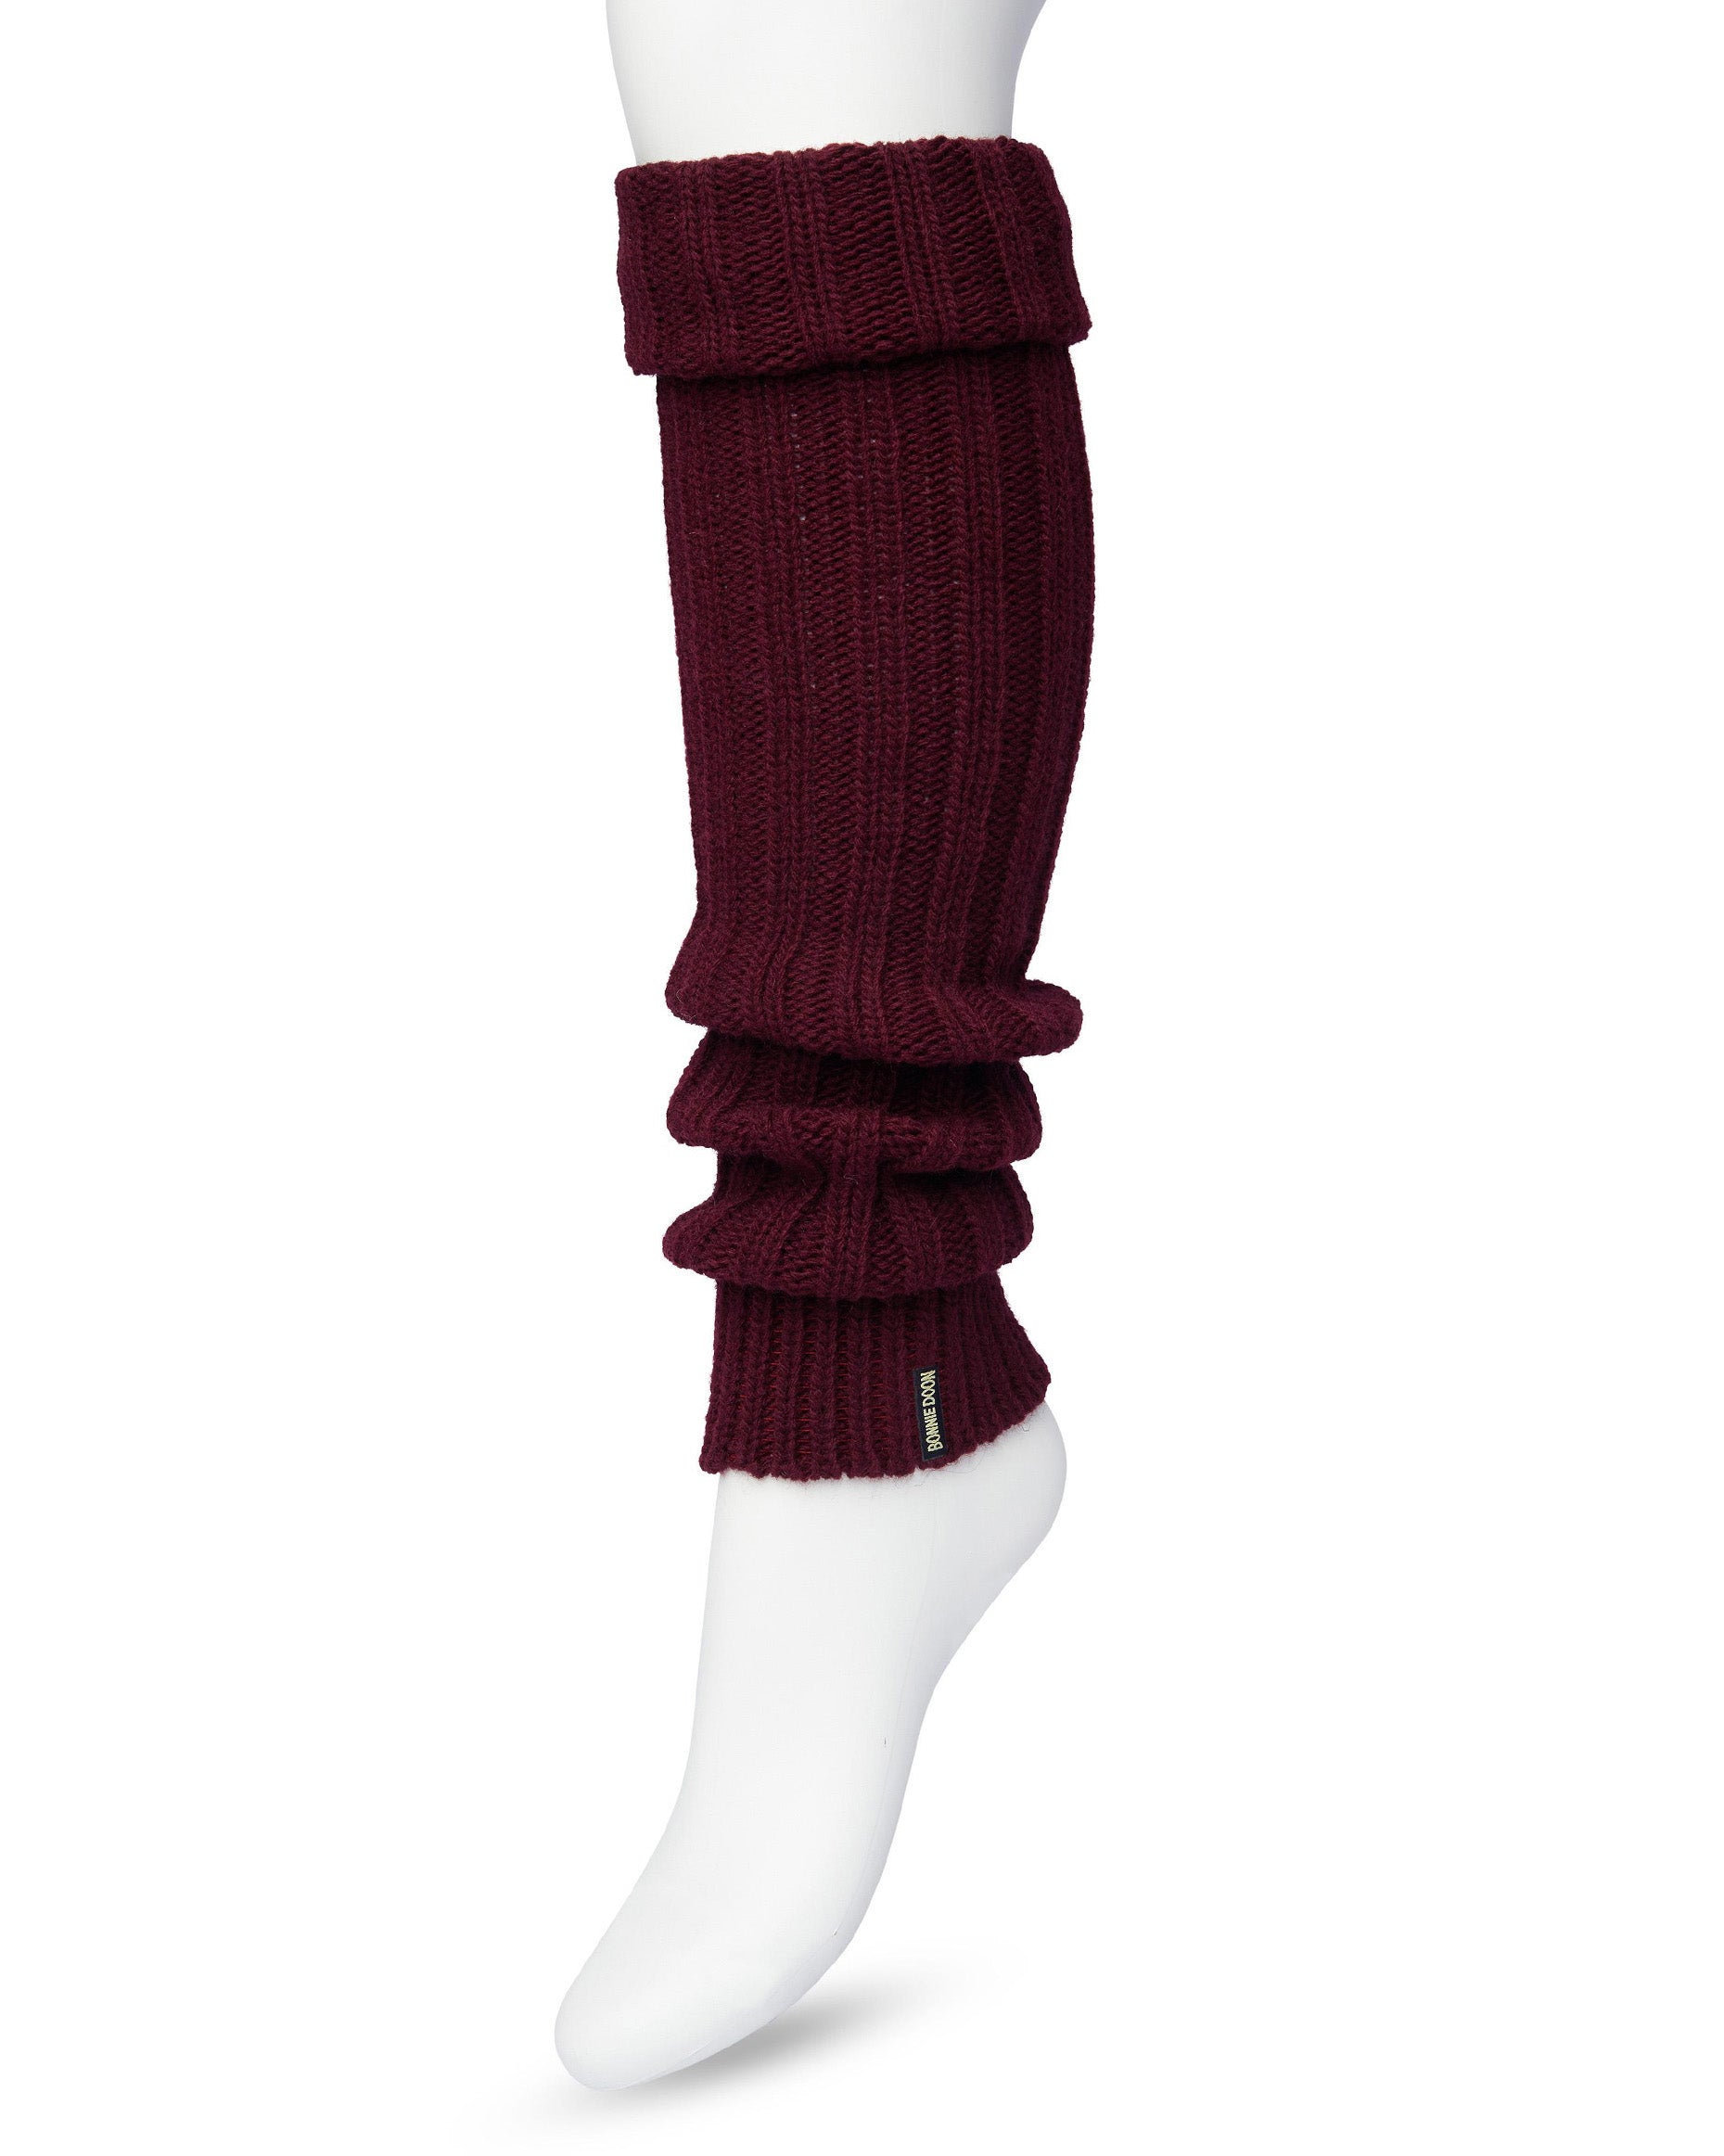 Bonnie Doon Sleever/Legwarmer BE021766 - wine burgundy wool mix chunky knitted leg warmers